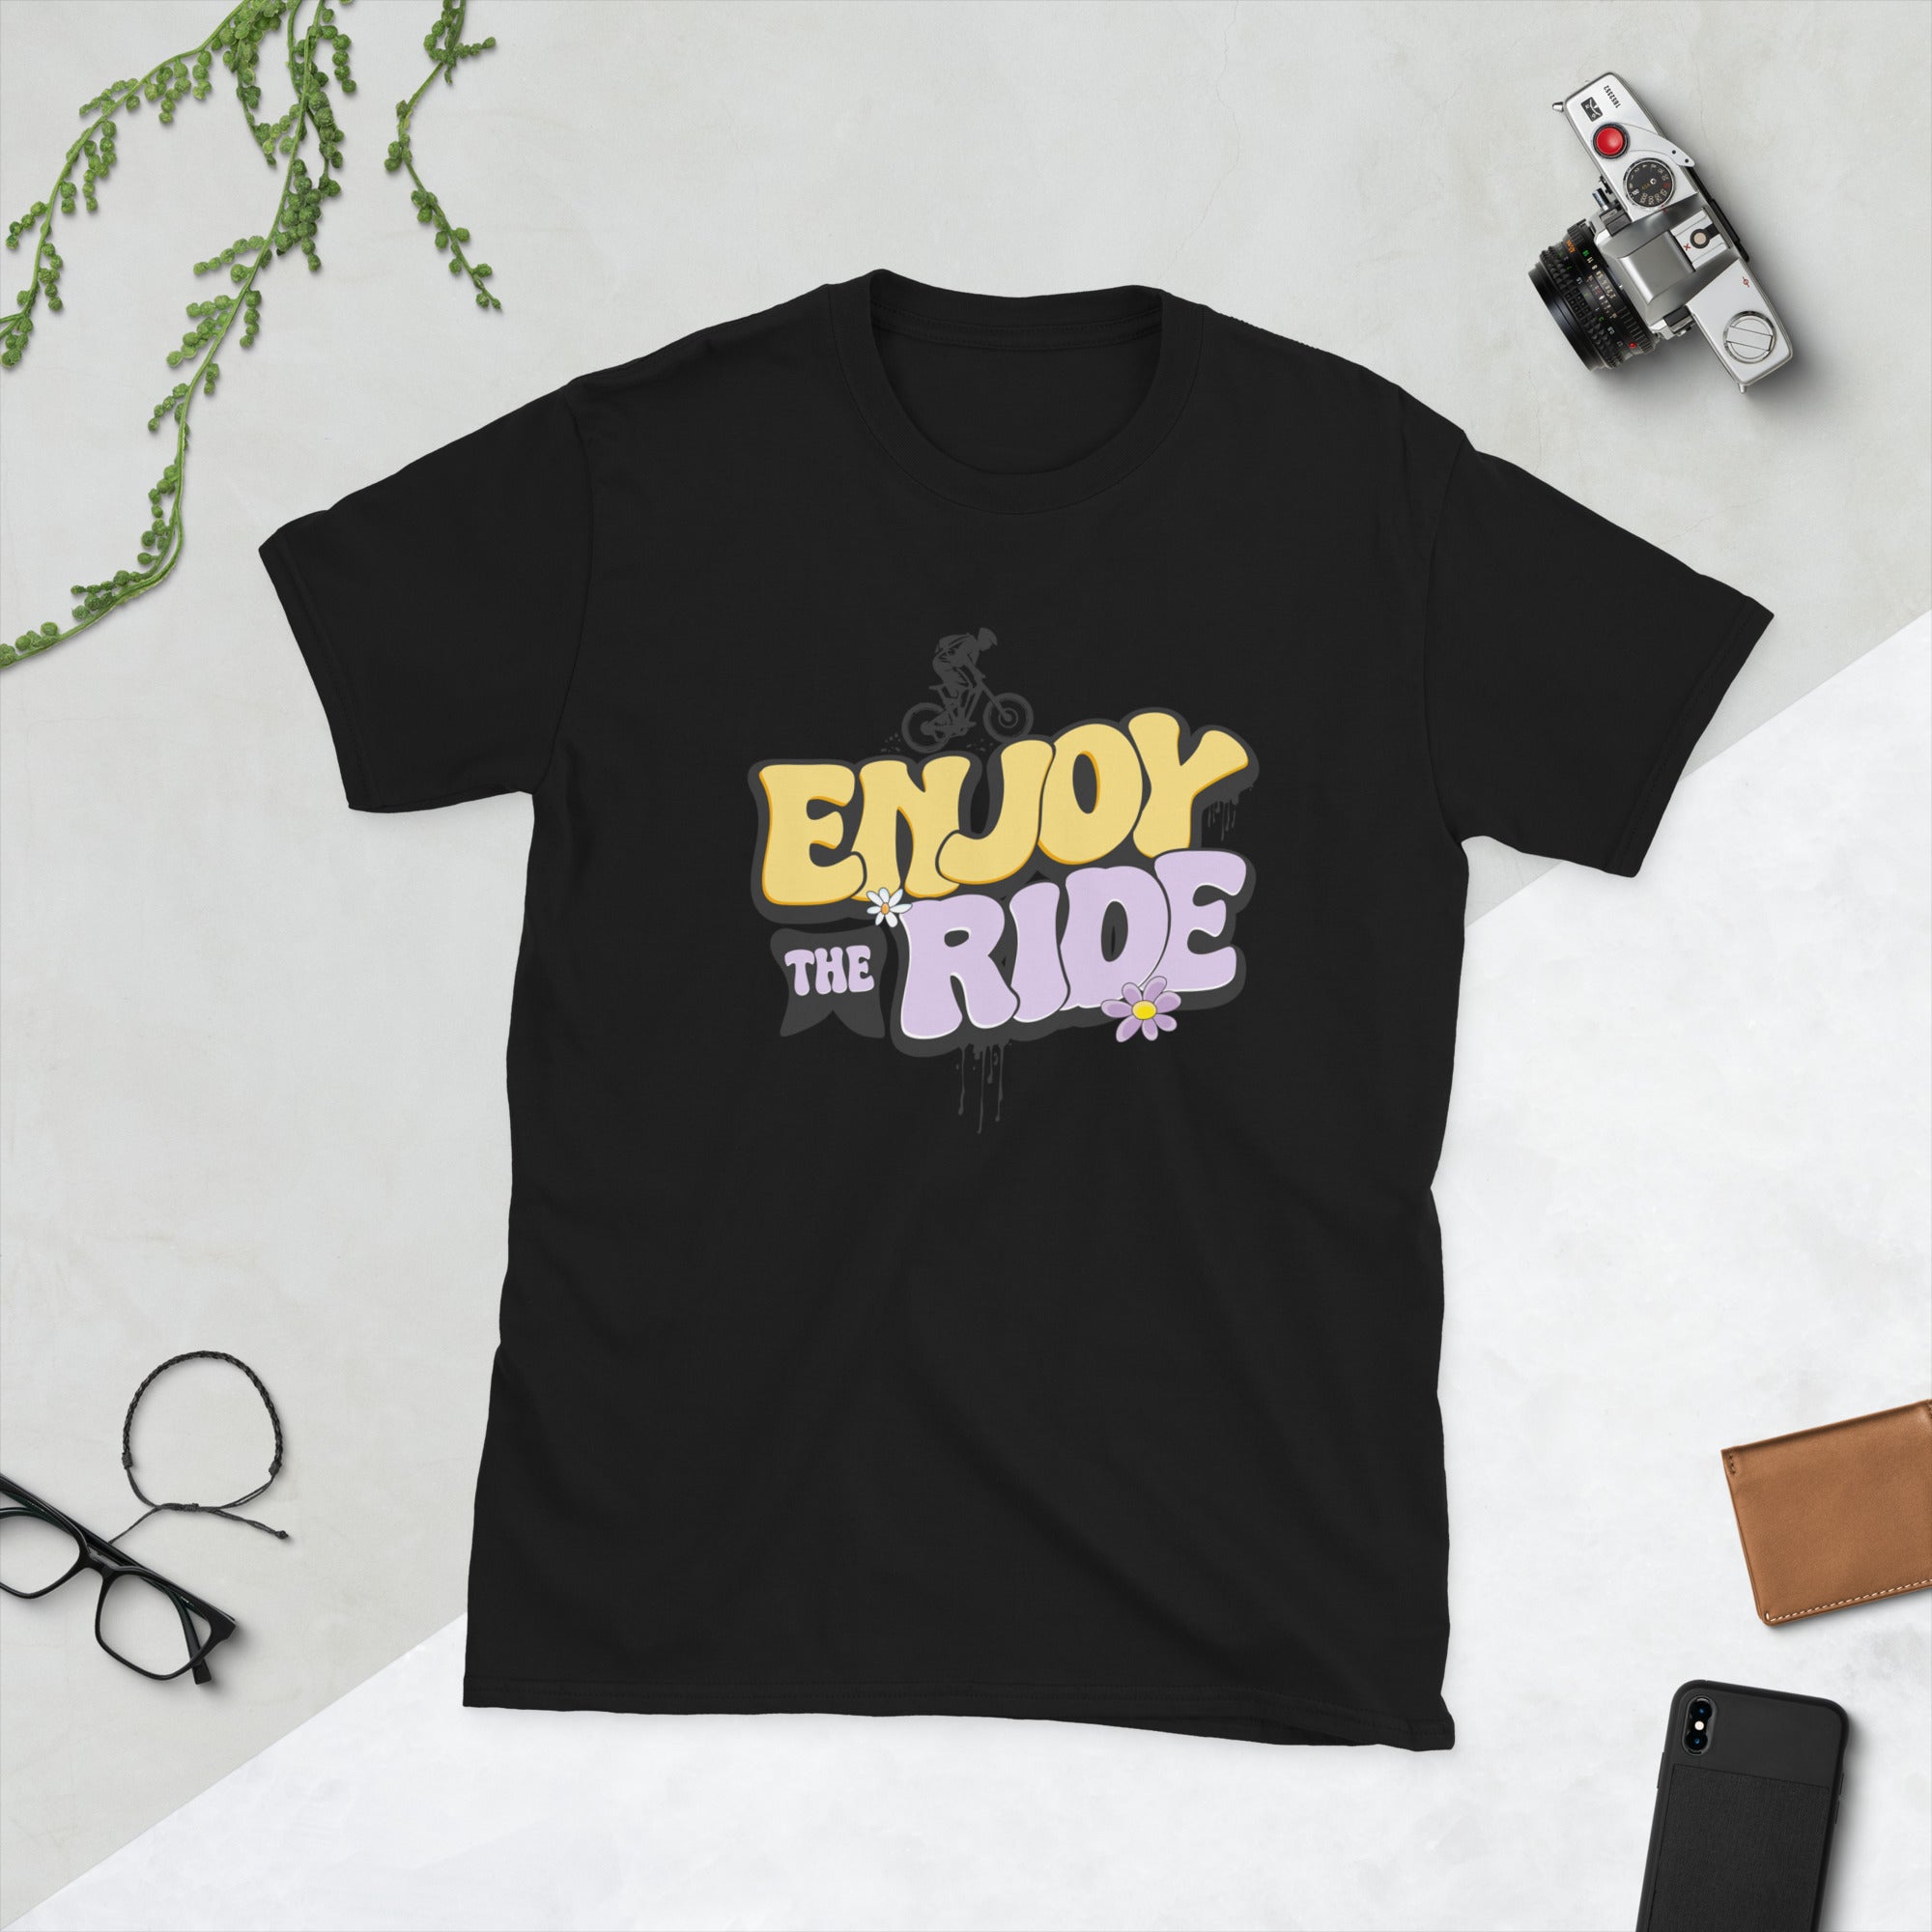 Enjoy The Ride Short-Sleeve T-Shirt